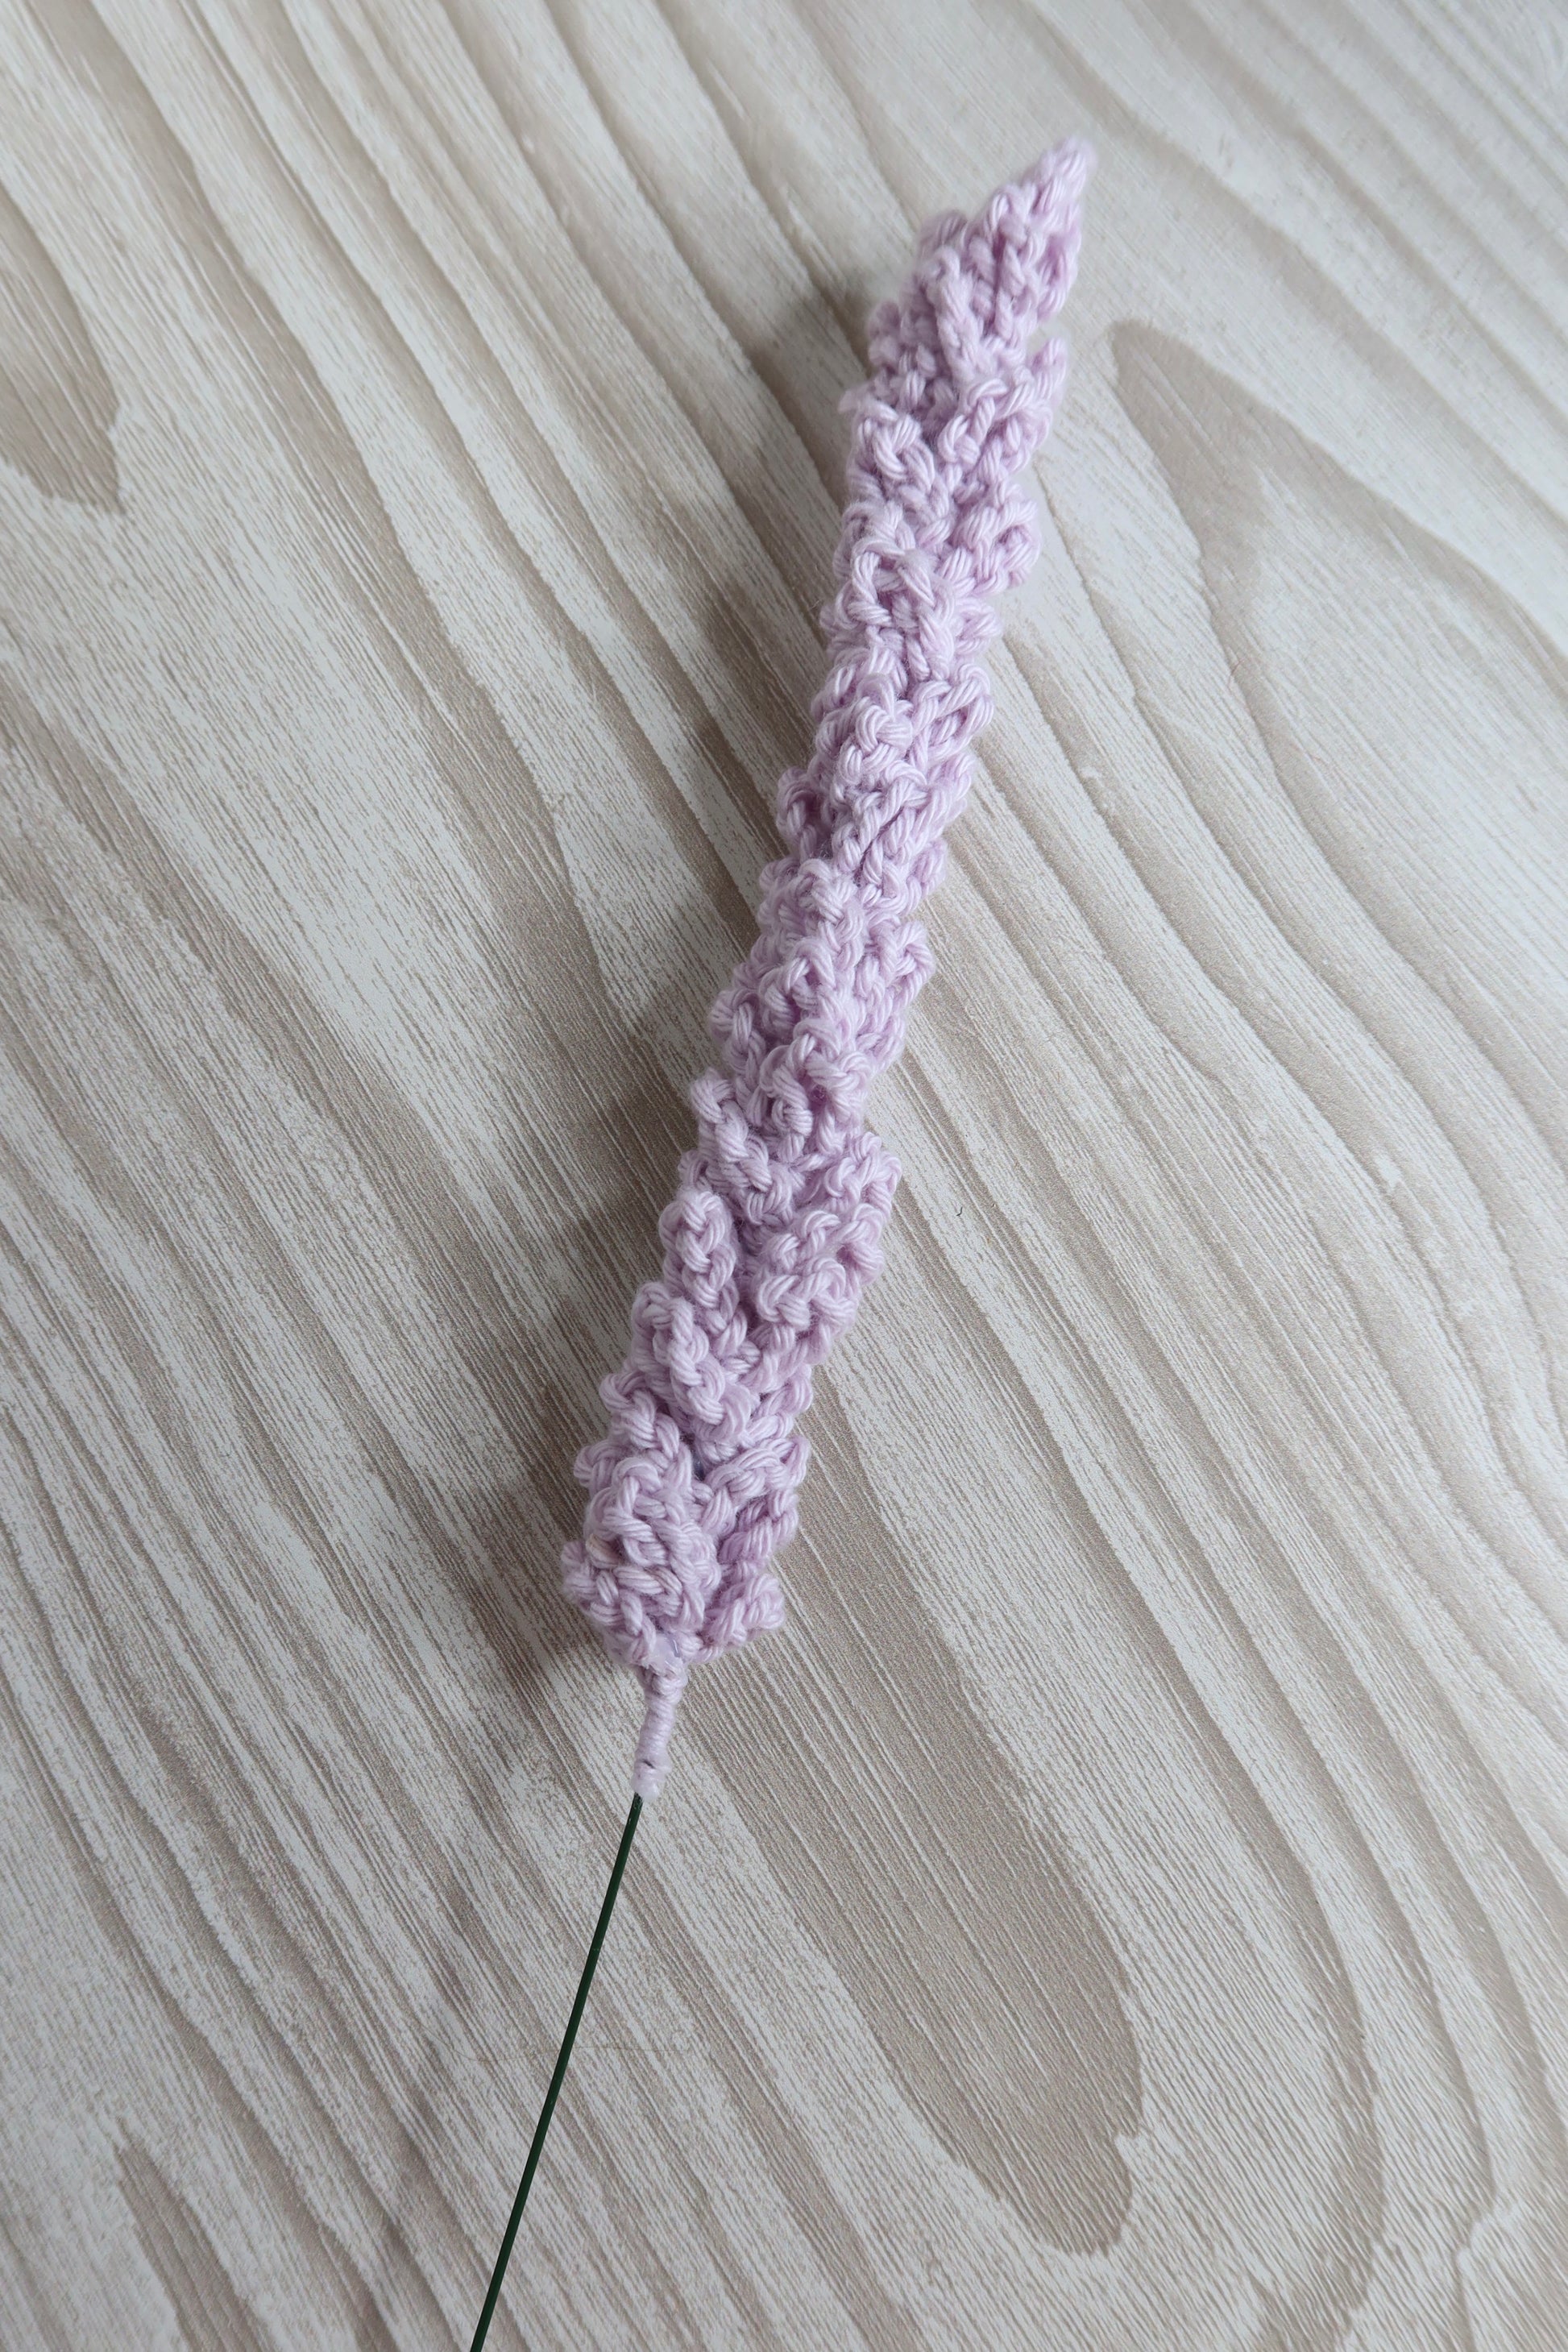 A single crochet lavender stem in Lilac